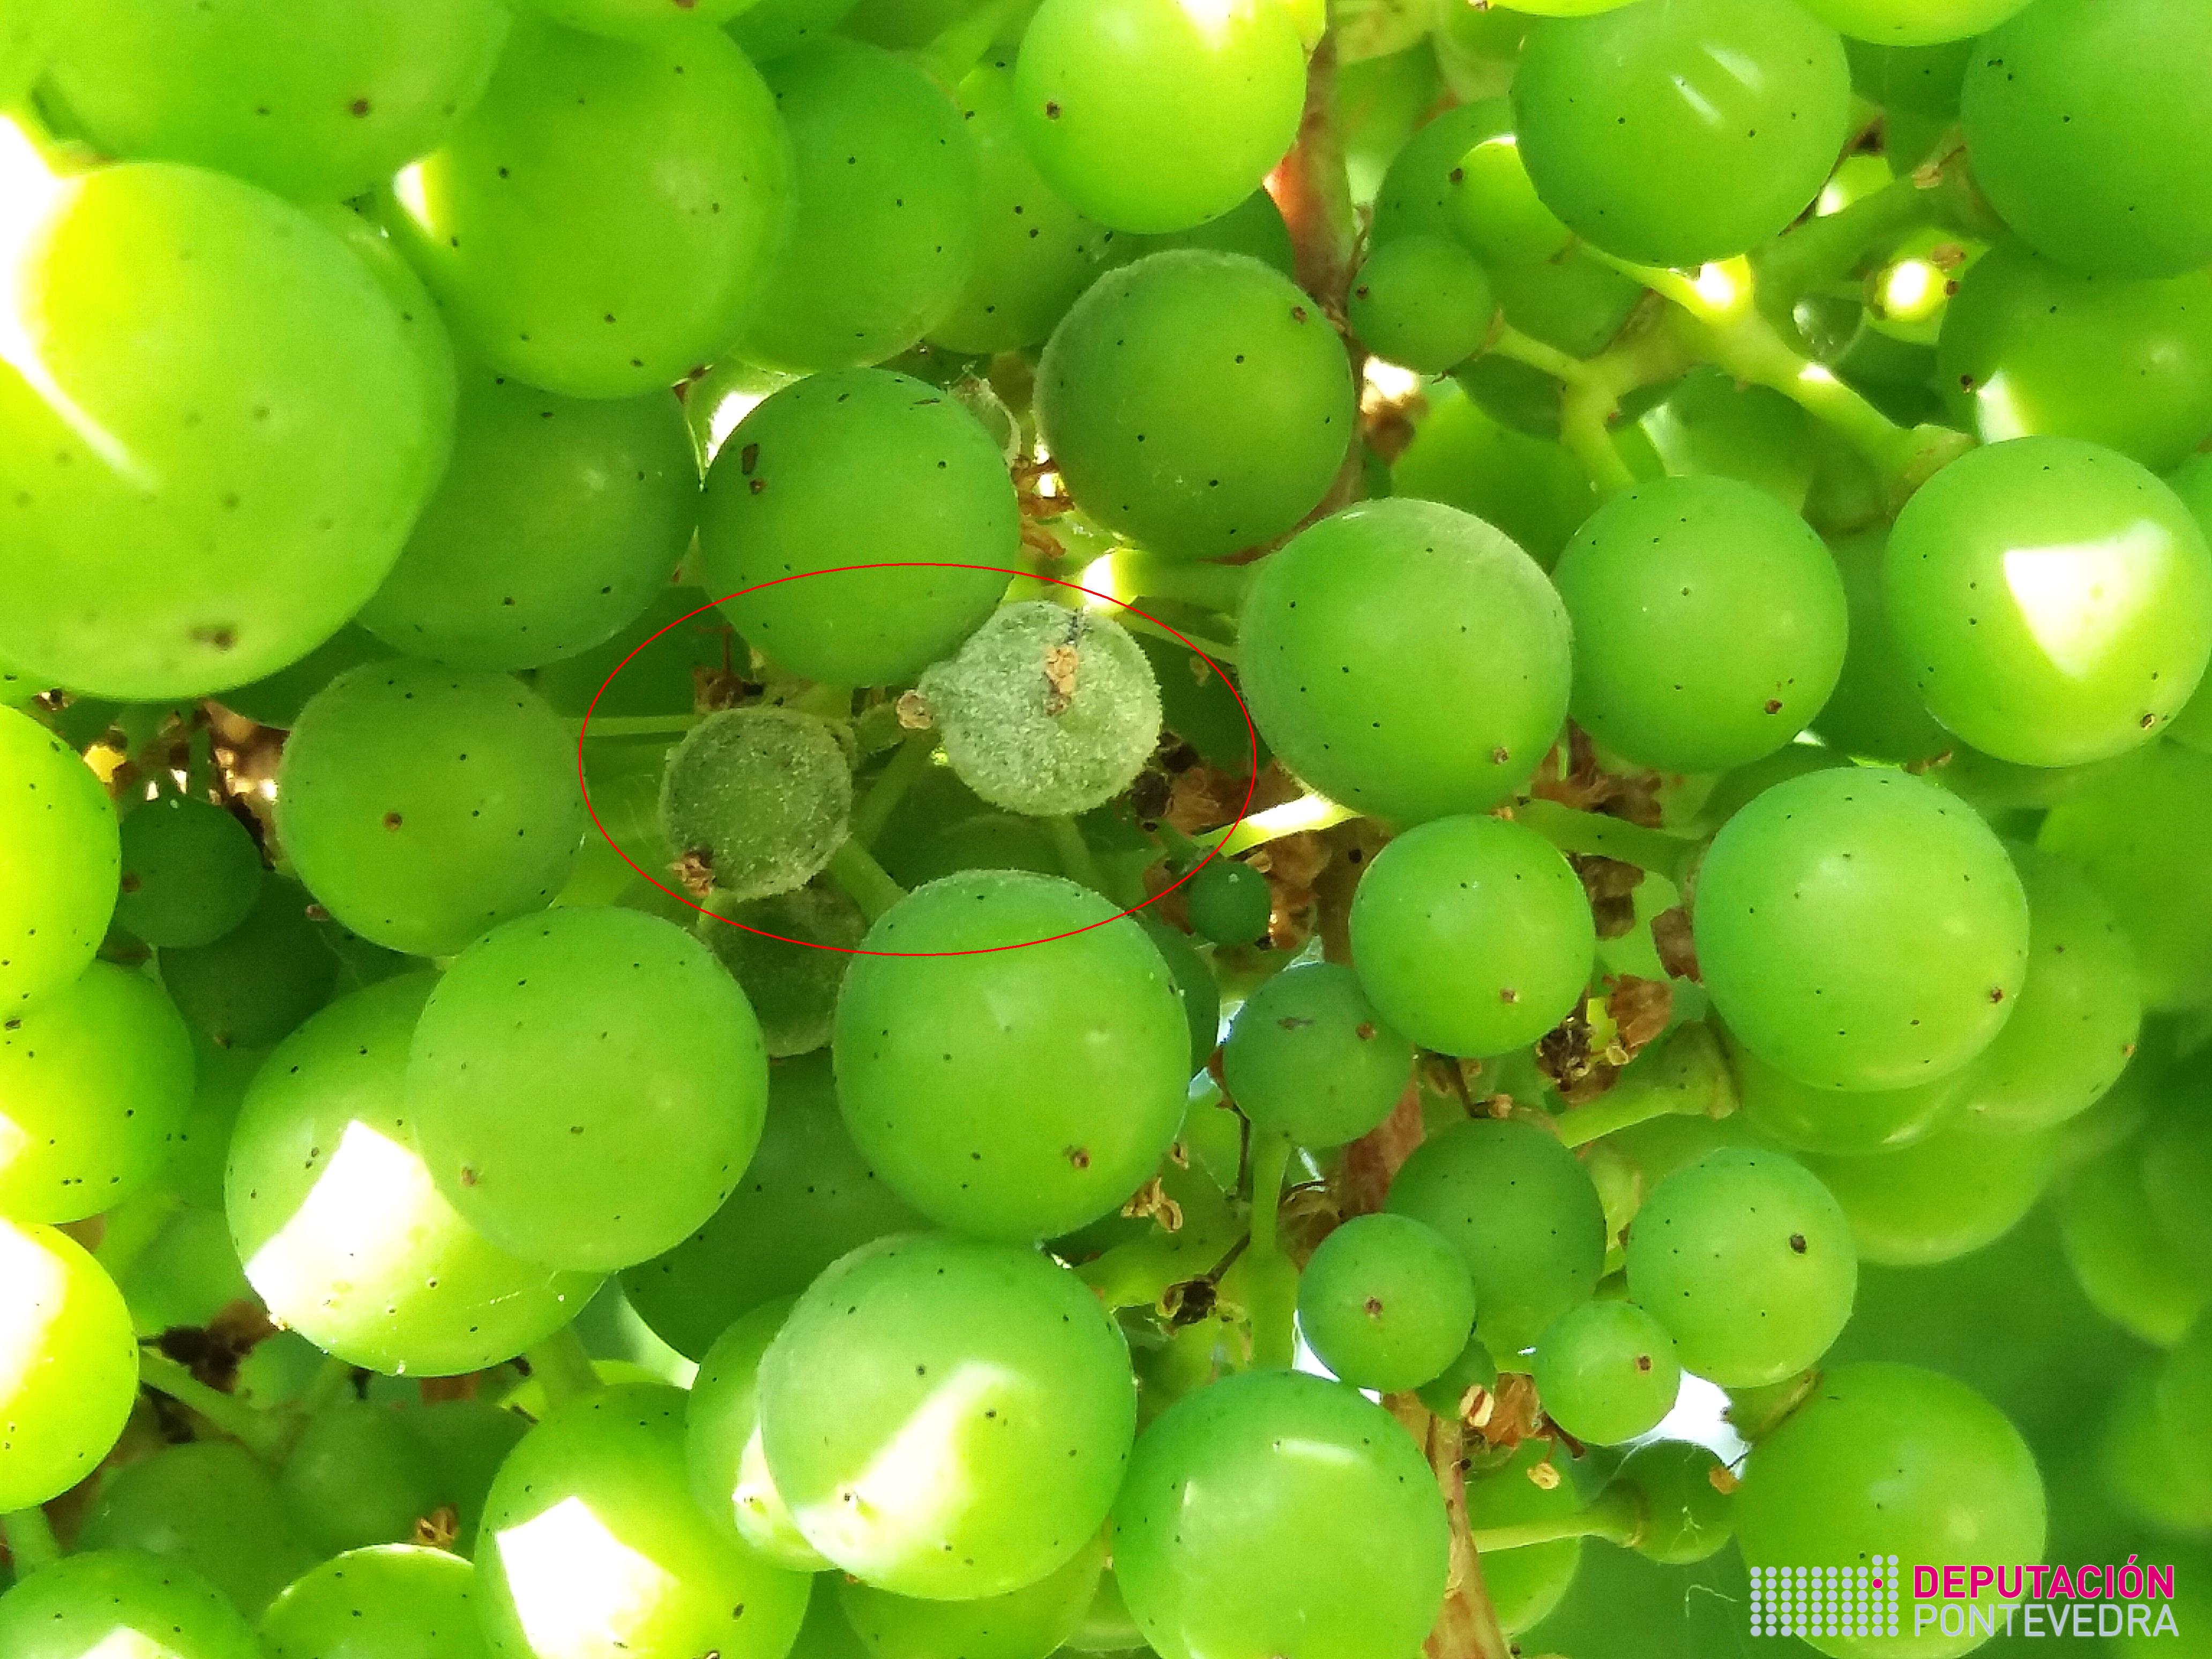 Gran de uva con oidio.jpg